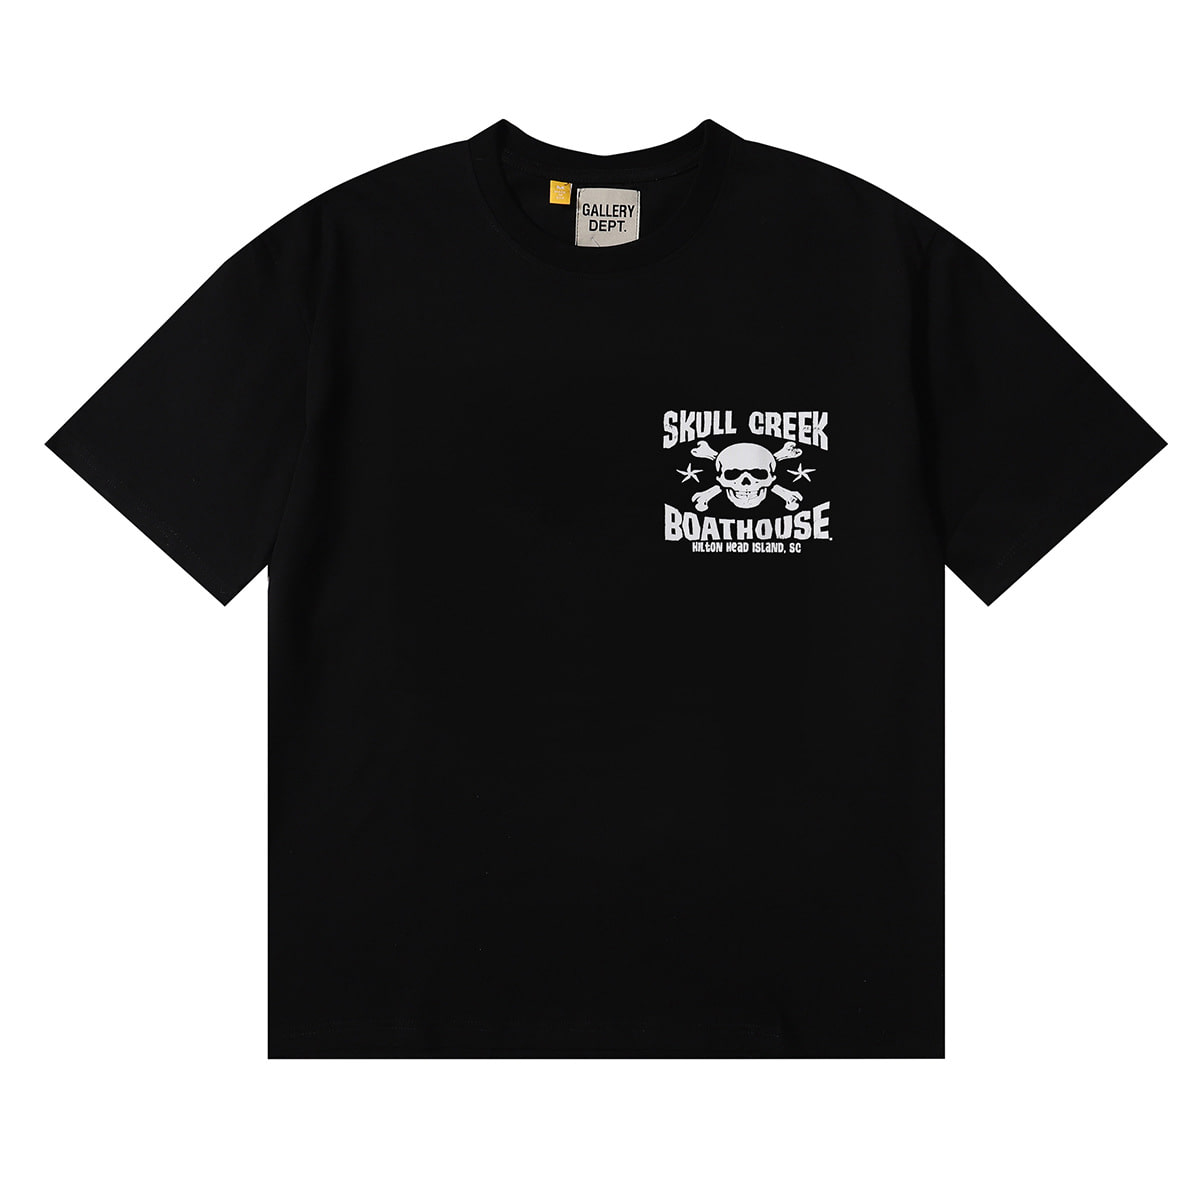 MZP GALLERY DEPT 해골 프린트 라운드 넥 티셔츠(2color)